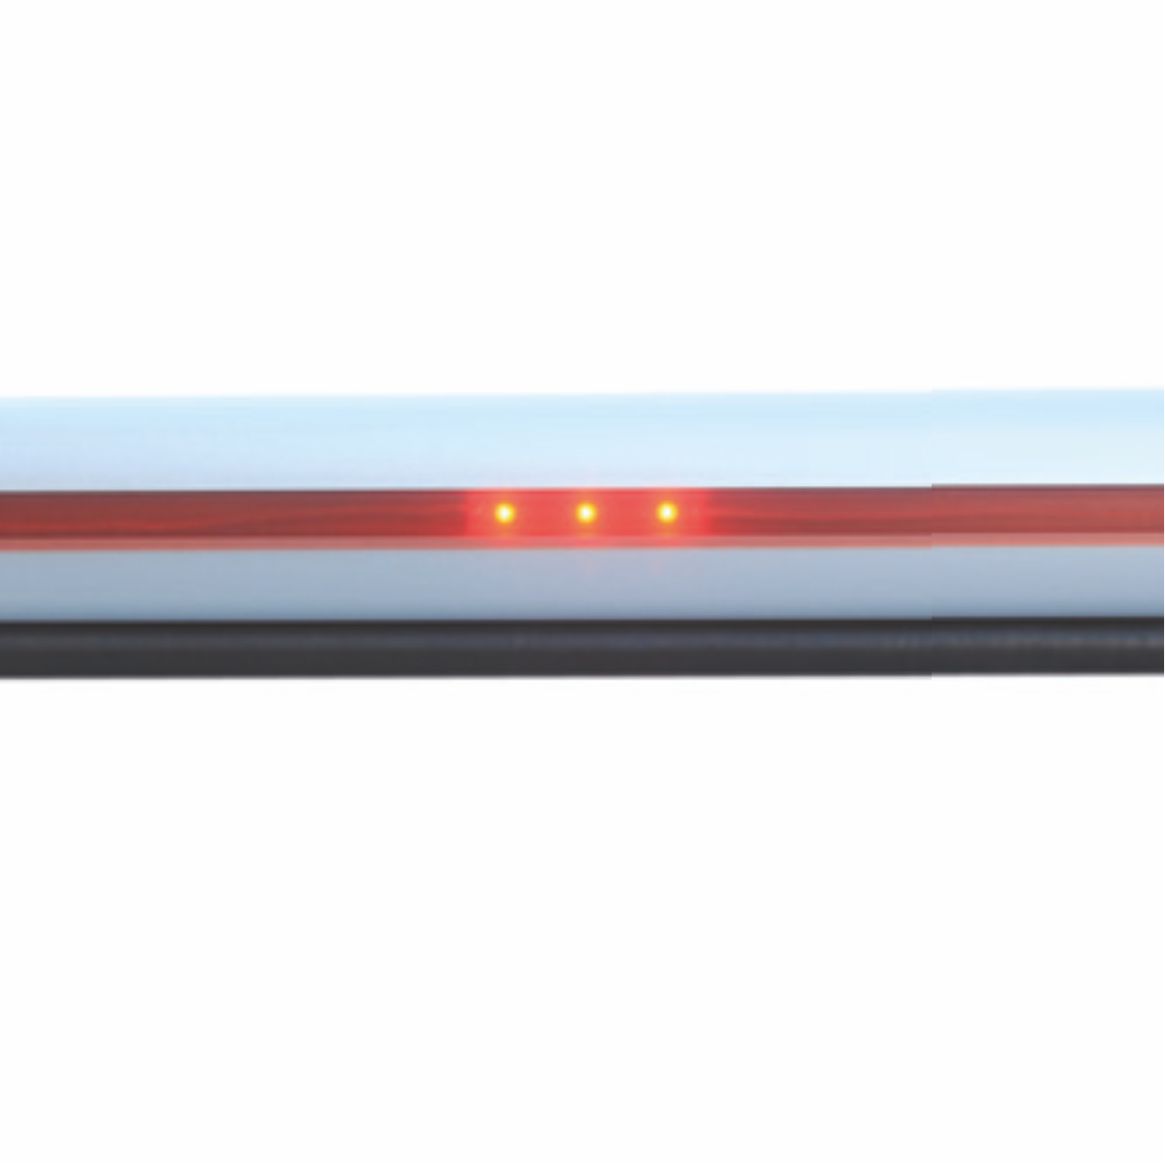 electromechanical boom lighting details red line white